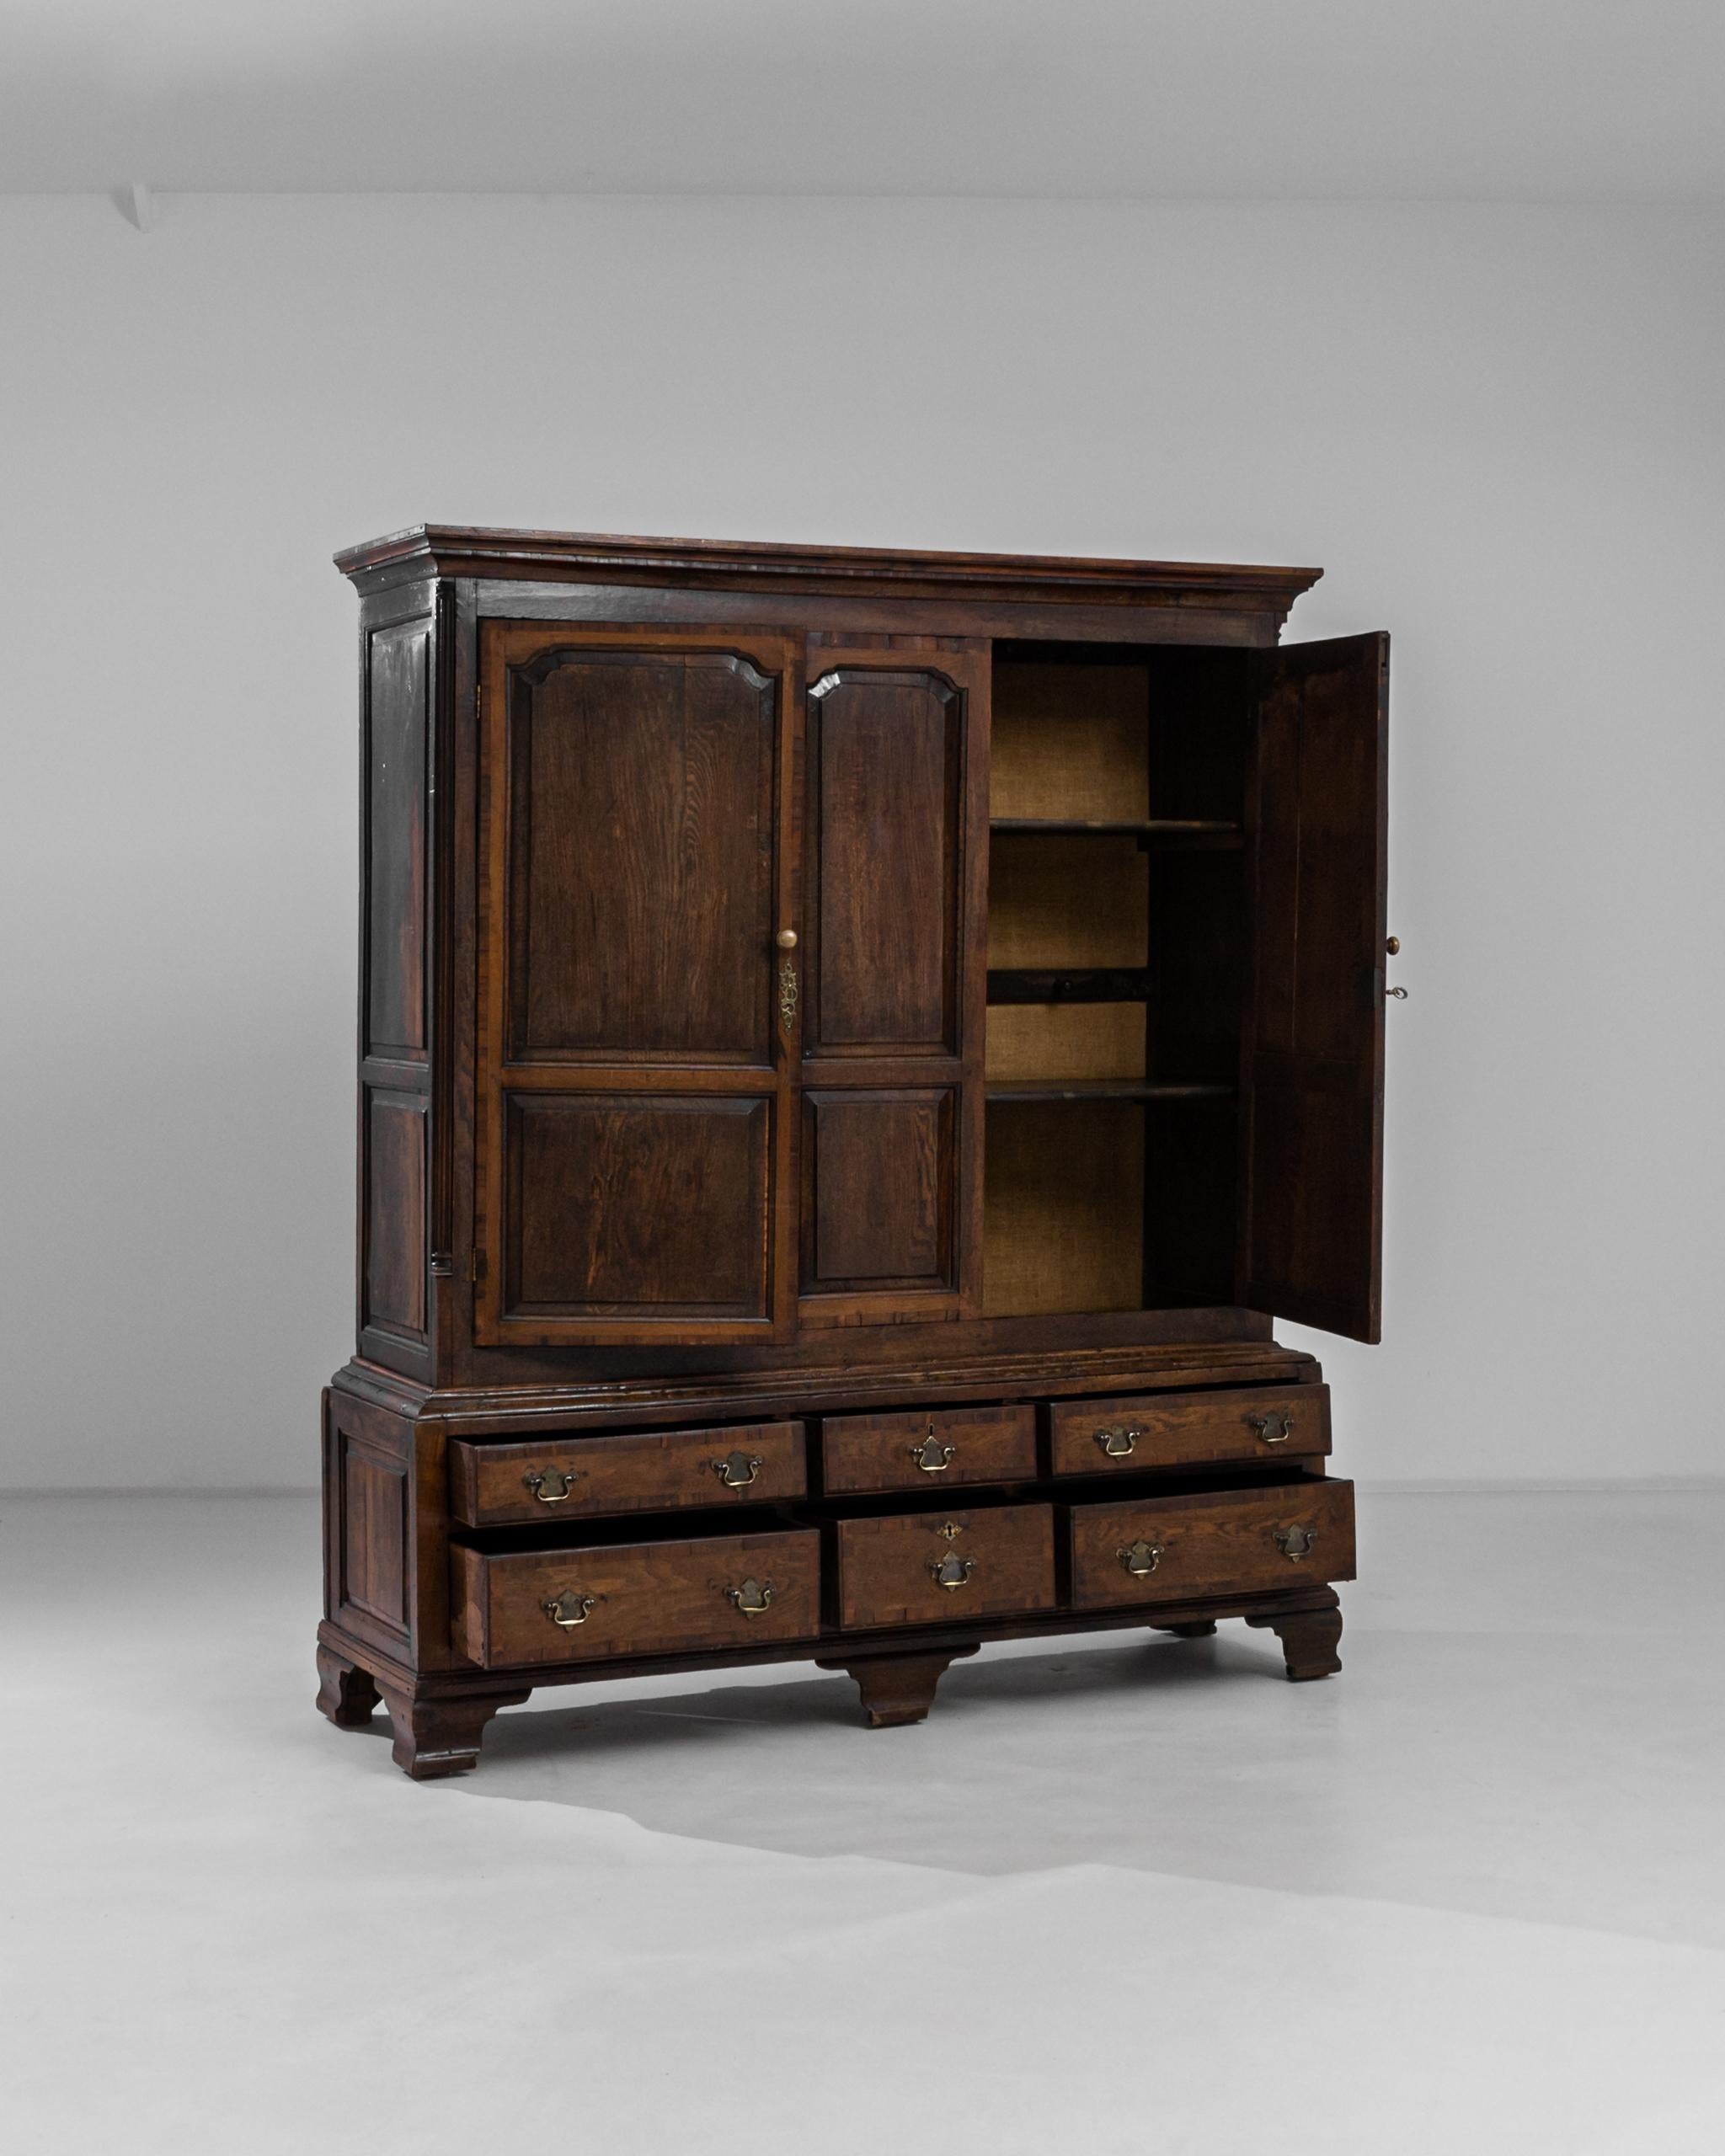 1870s British Wooden Cabinet with Original Patina 4